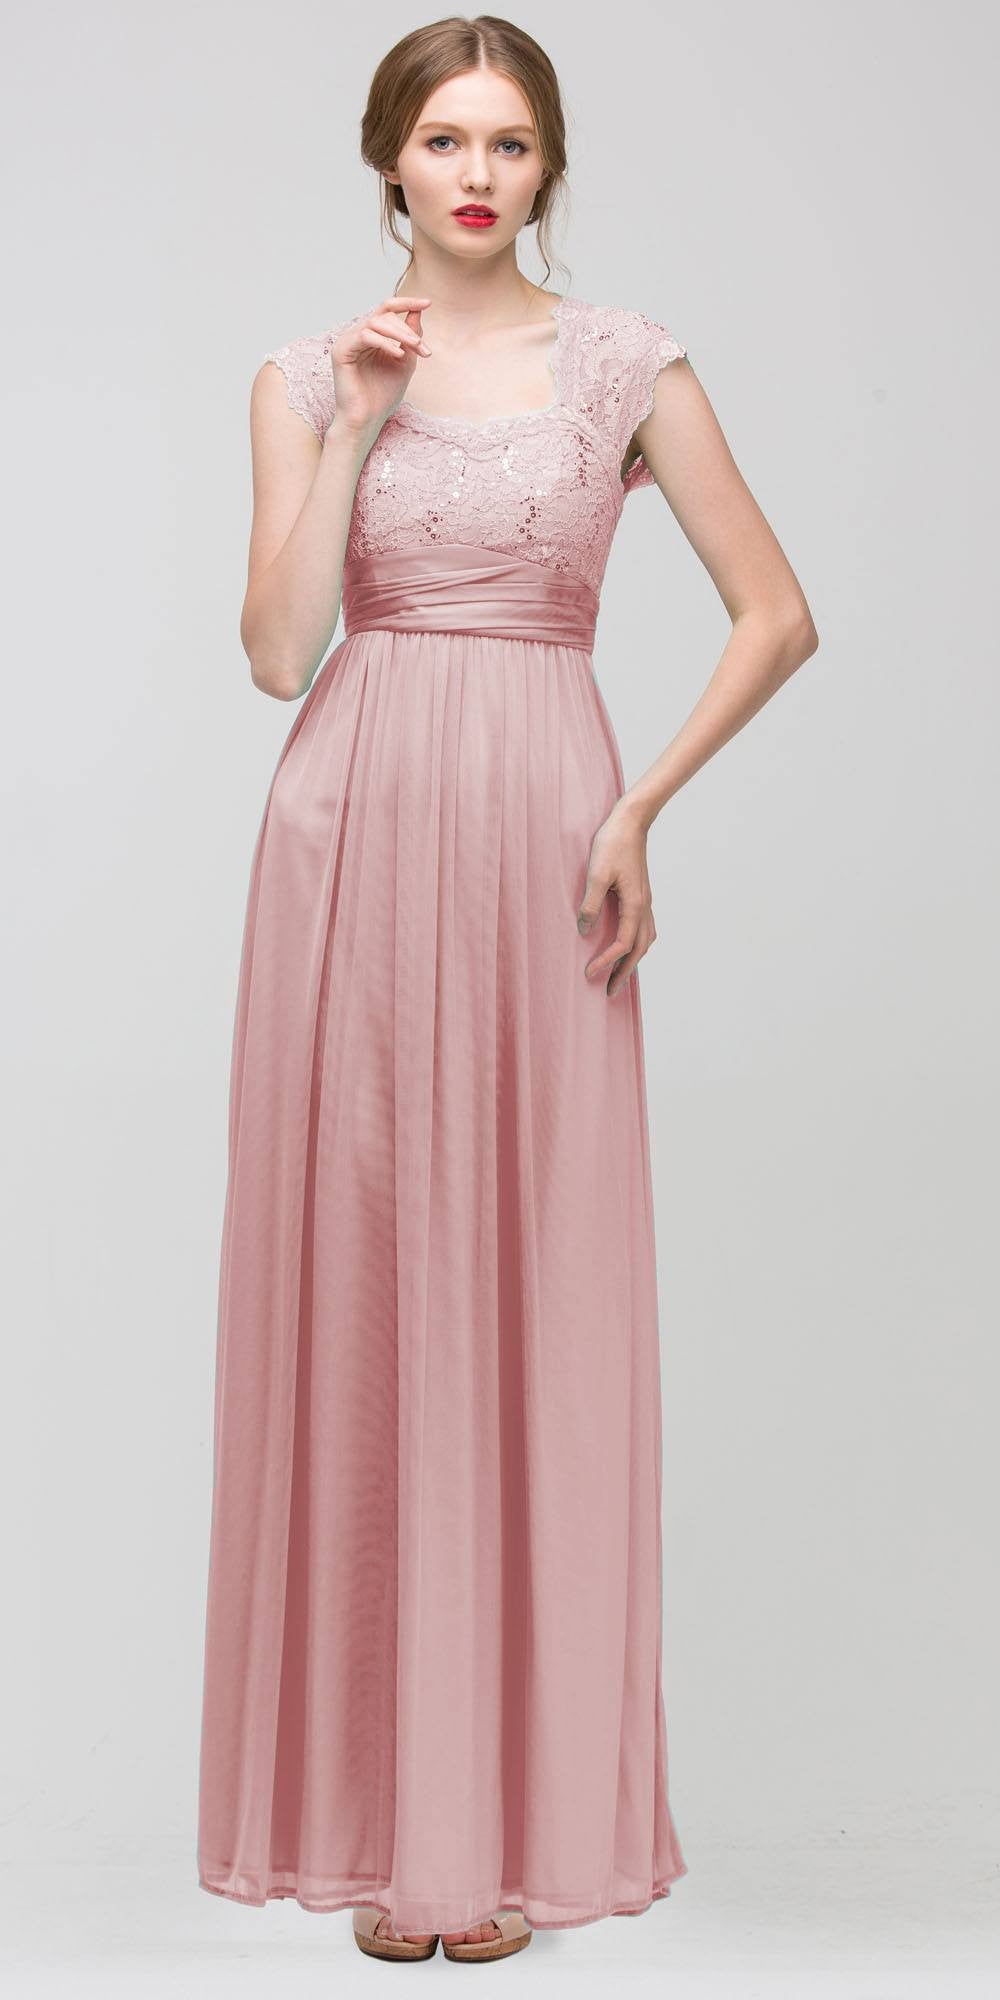 Sweetheart Neck Lace Bodice Dusty Pink Floor Length Dress